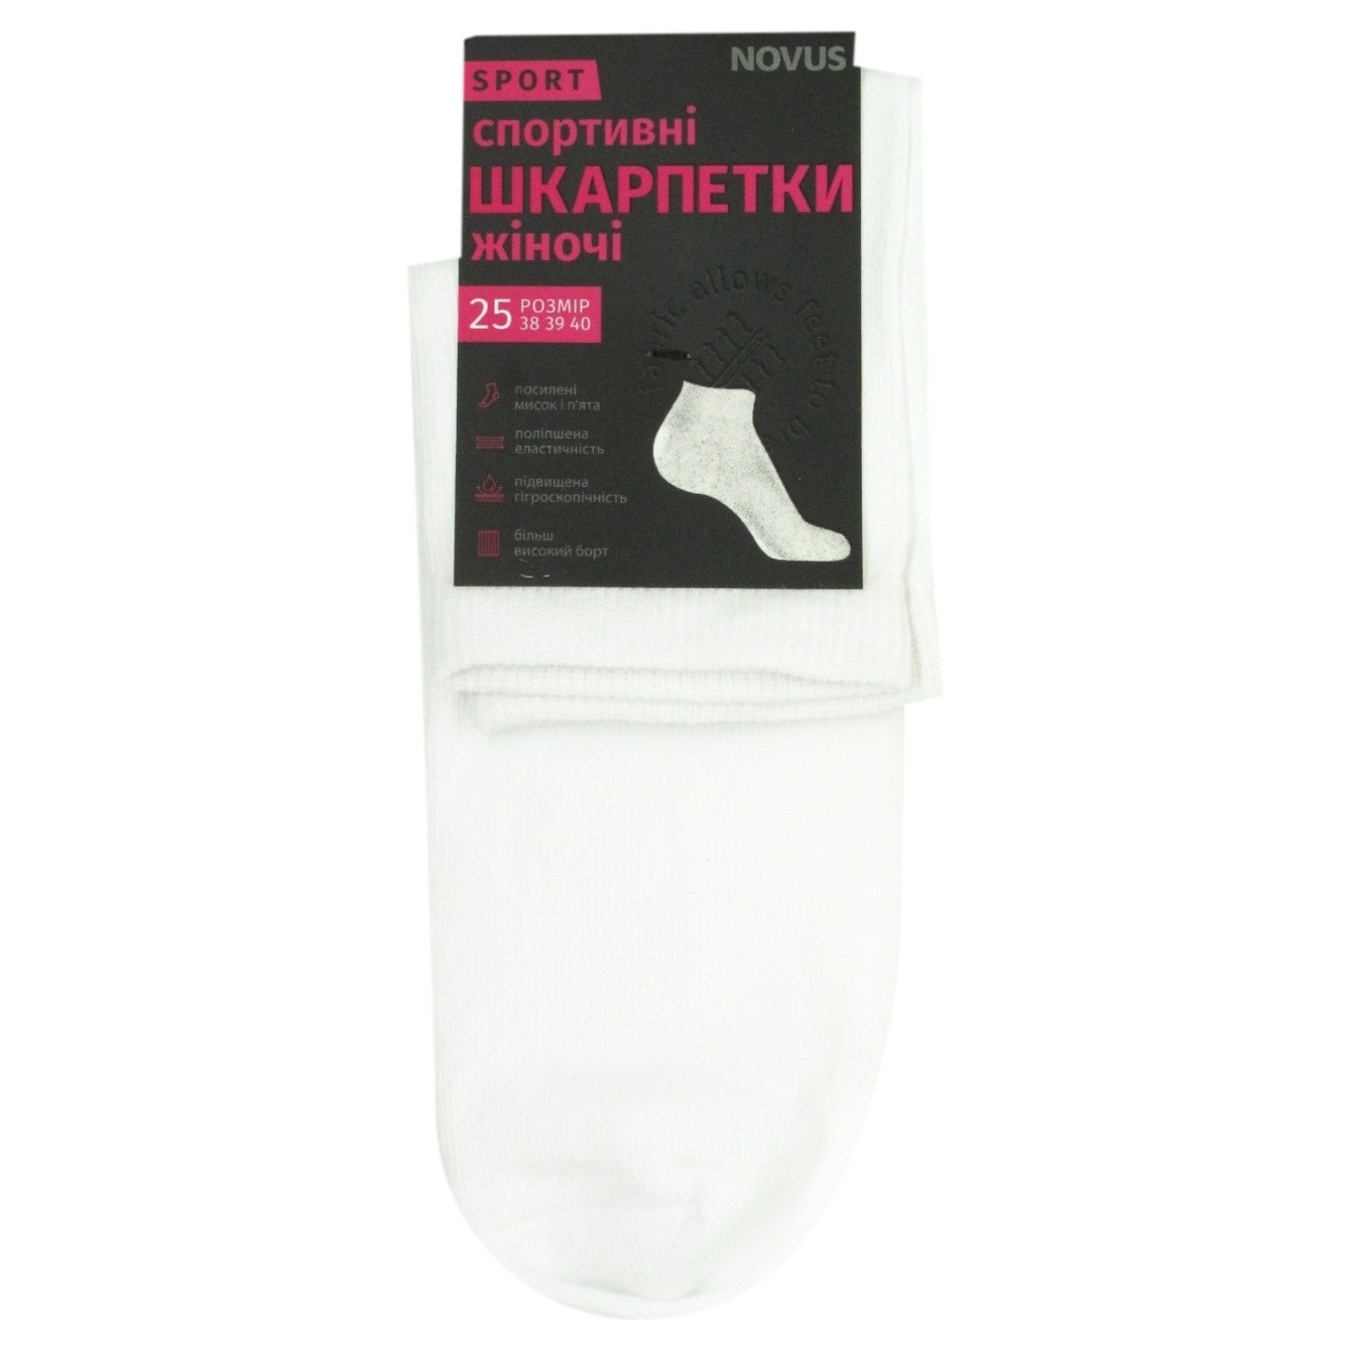 Women's socks NOVUS demi-season medium white size 25